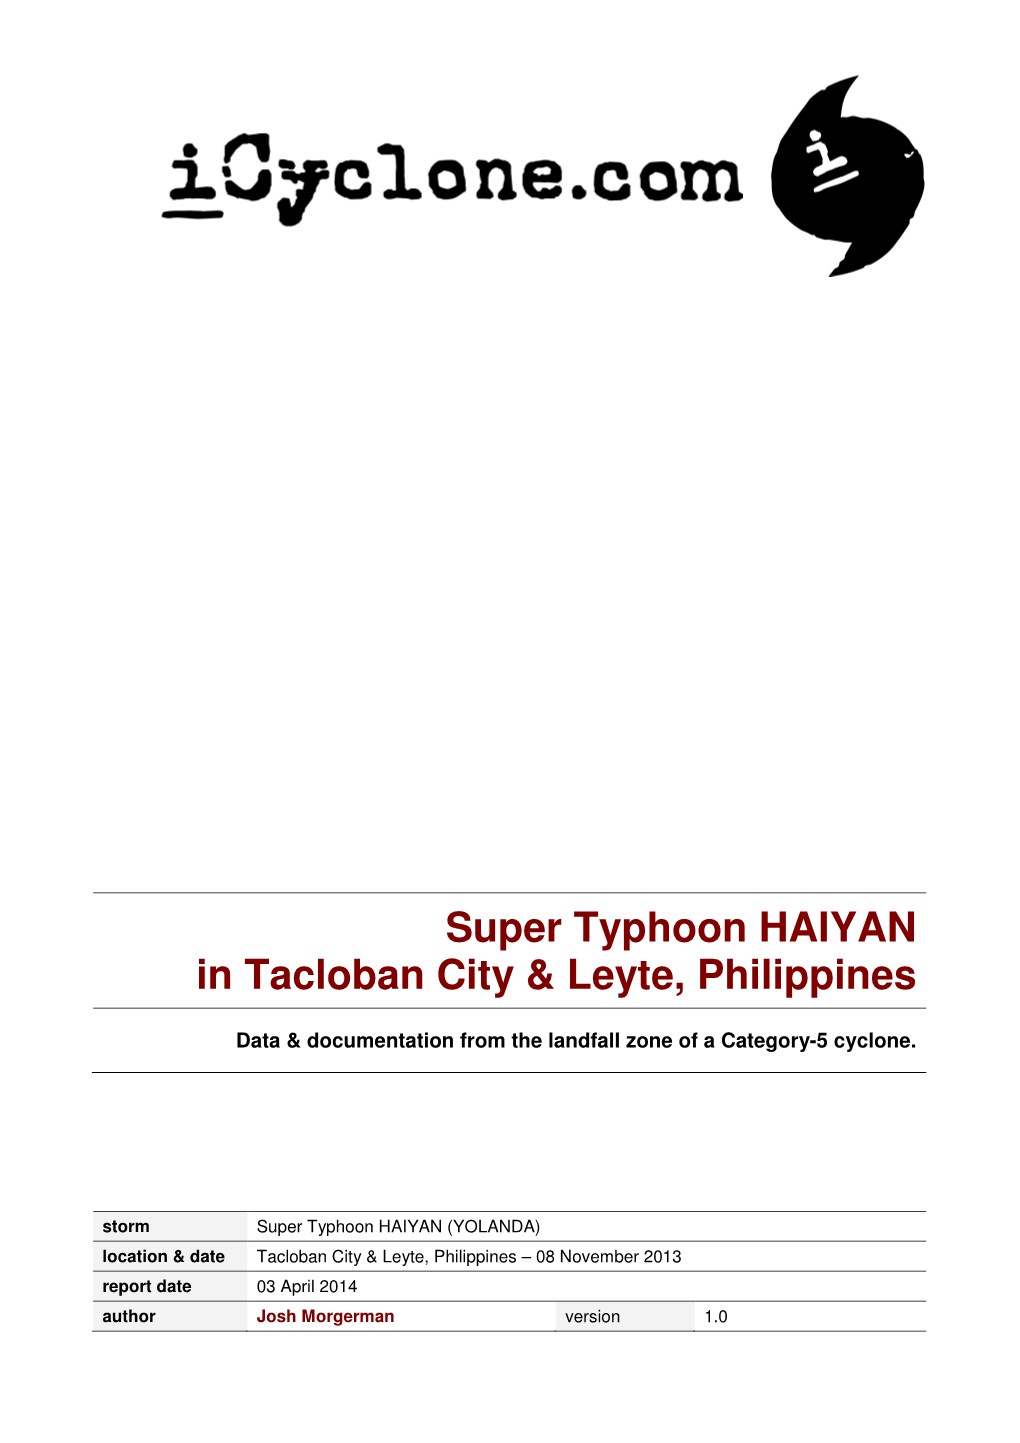 Super Typhoon HAIYAN in Tacloban City & Leyte, Philippines